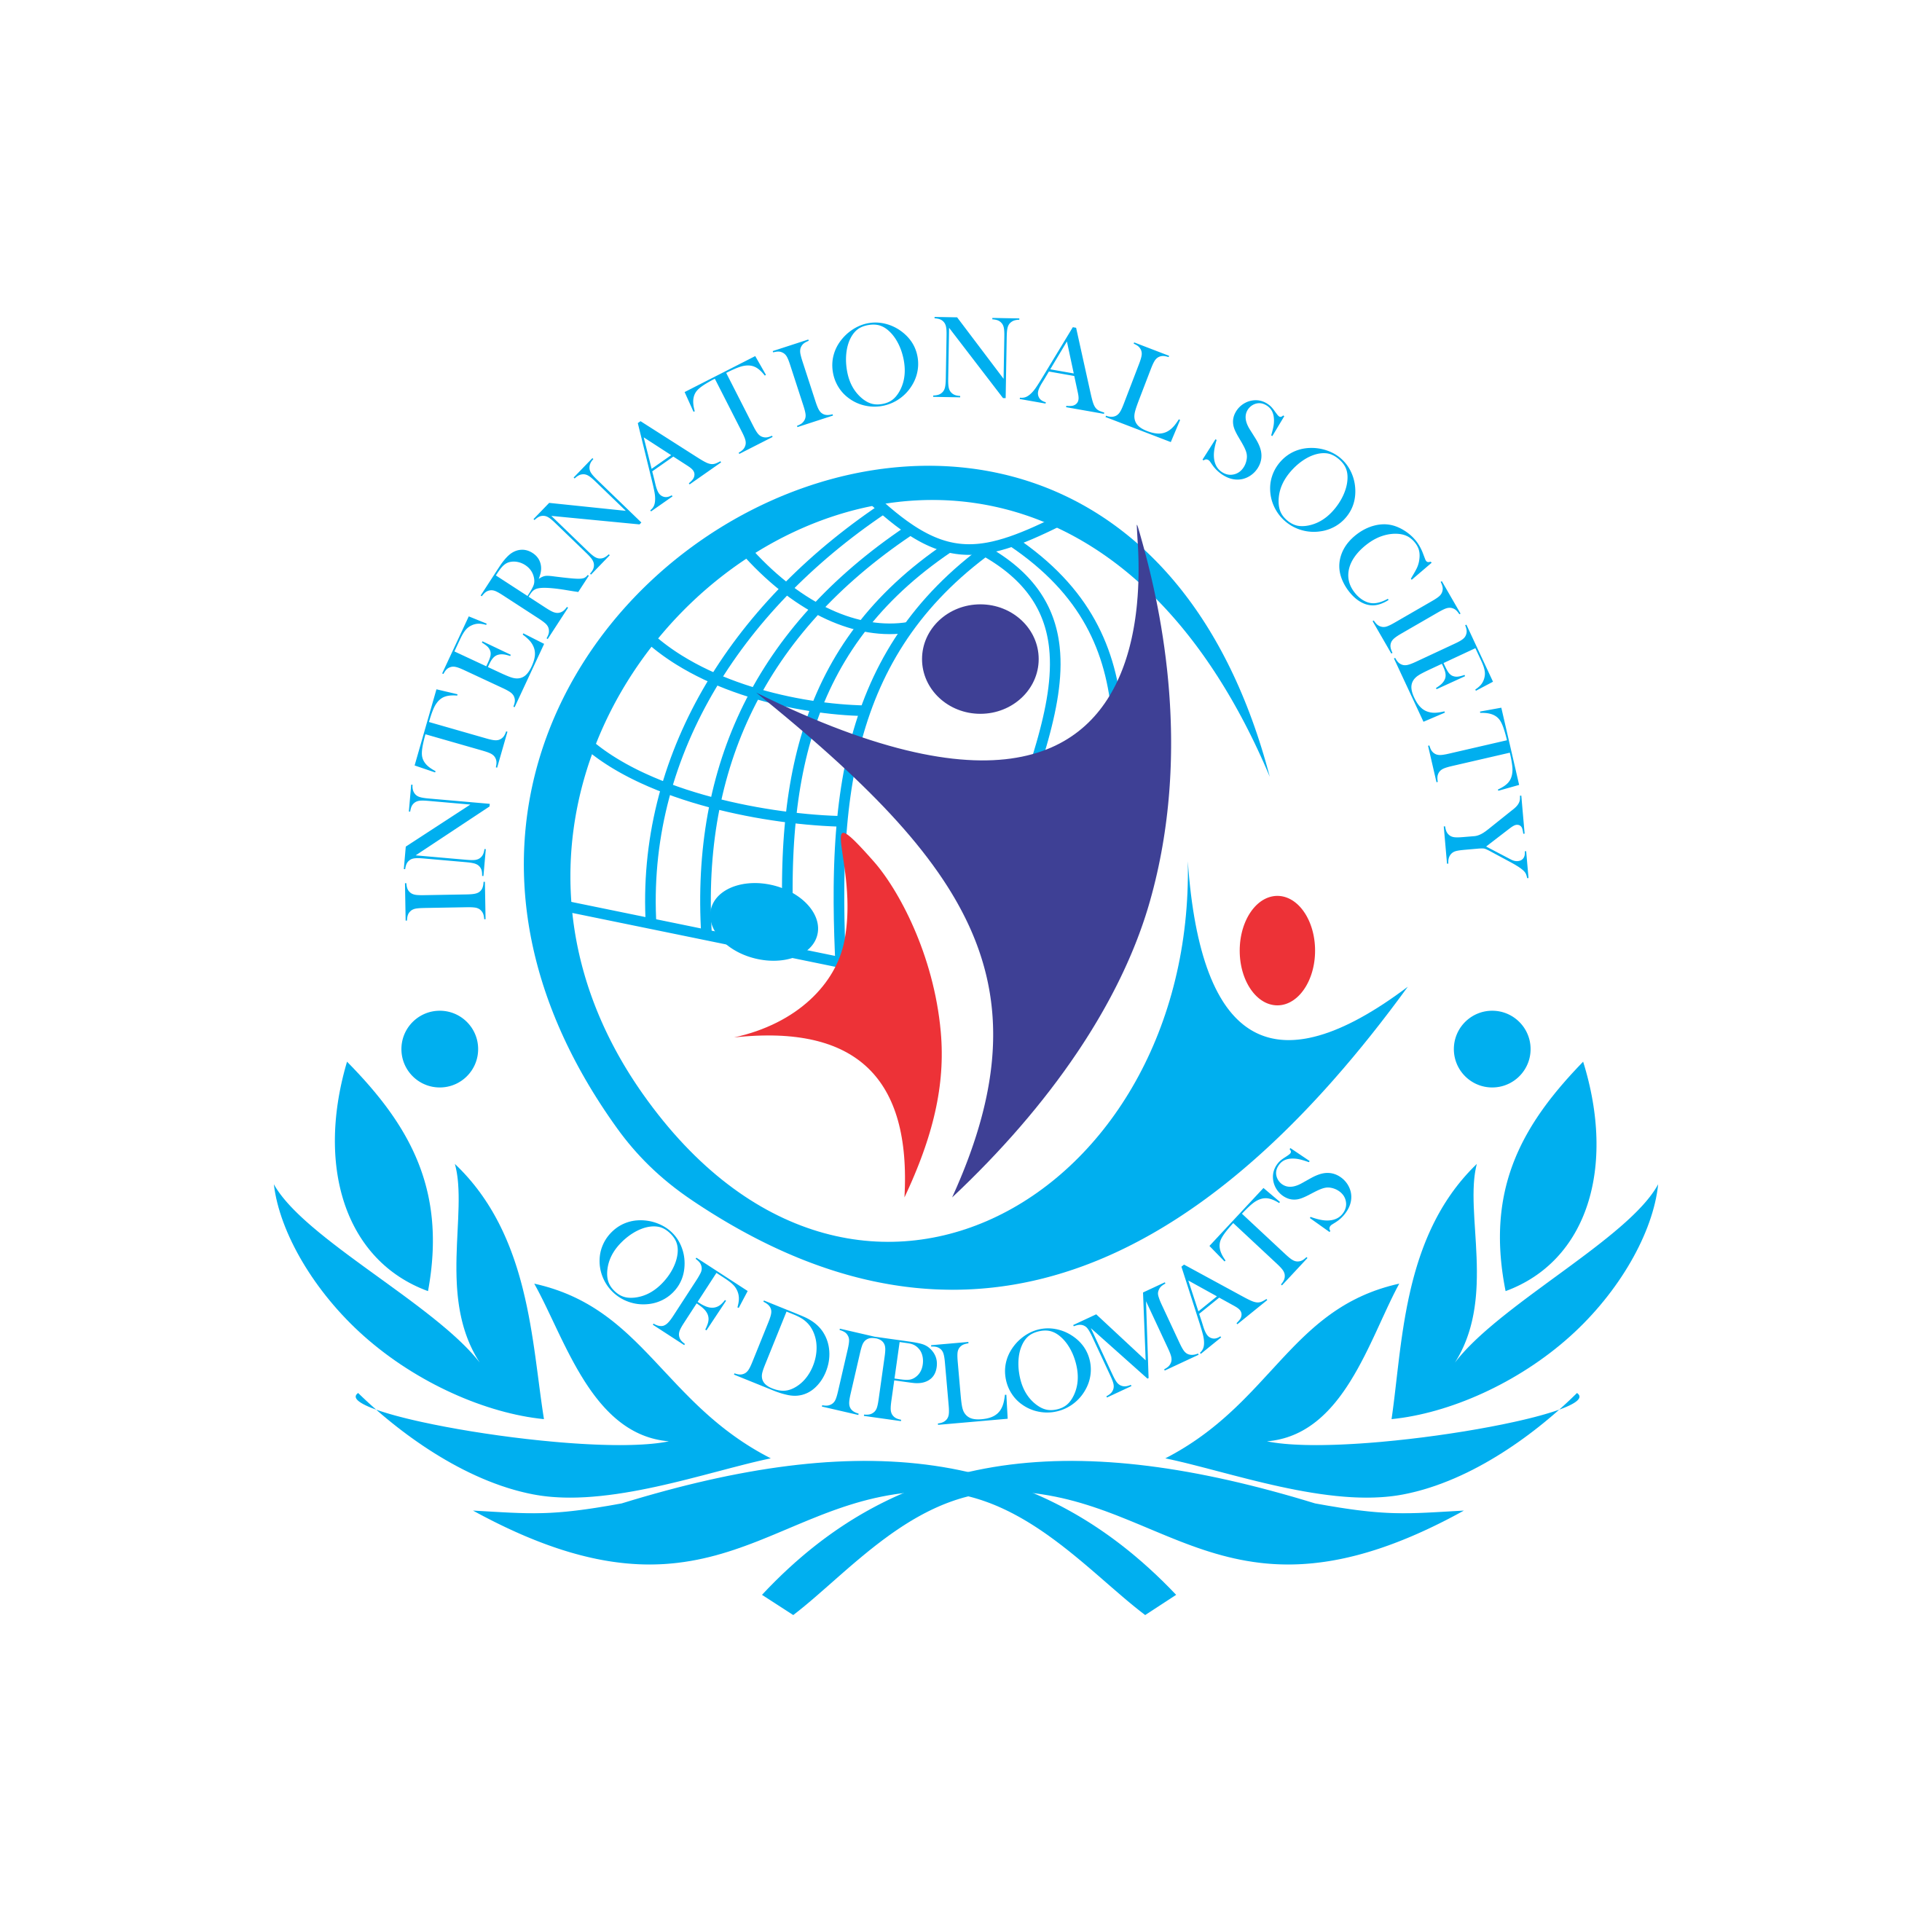 Diplomatic Missions – International Society of Diplomats